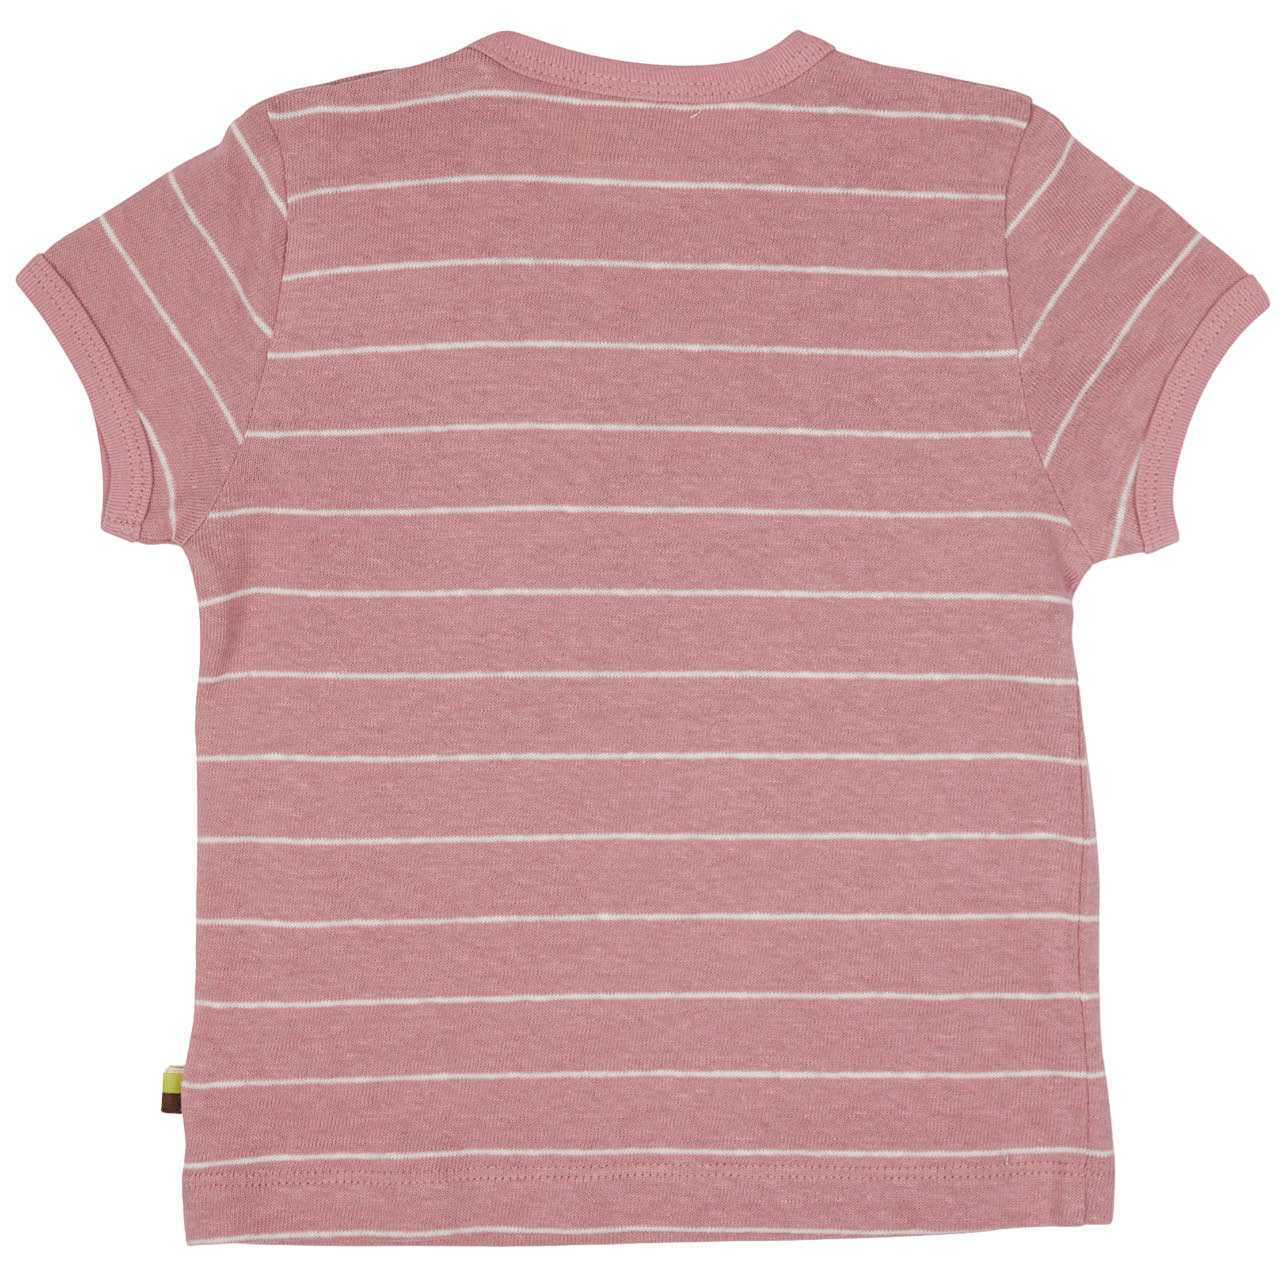 Leichtes Leinen Shirt kurzarm rosa geringelt